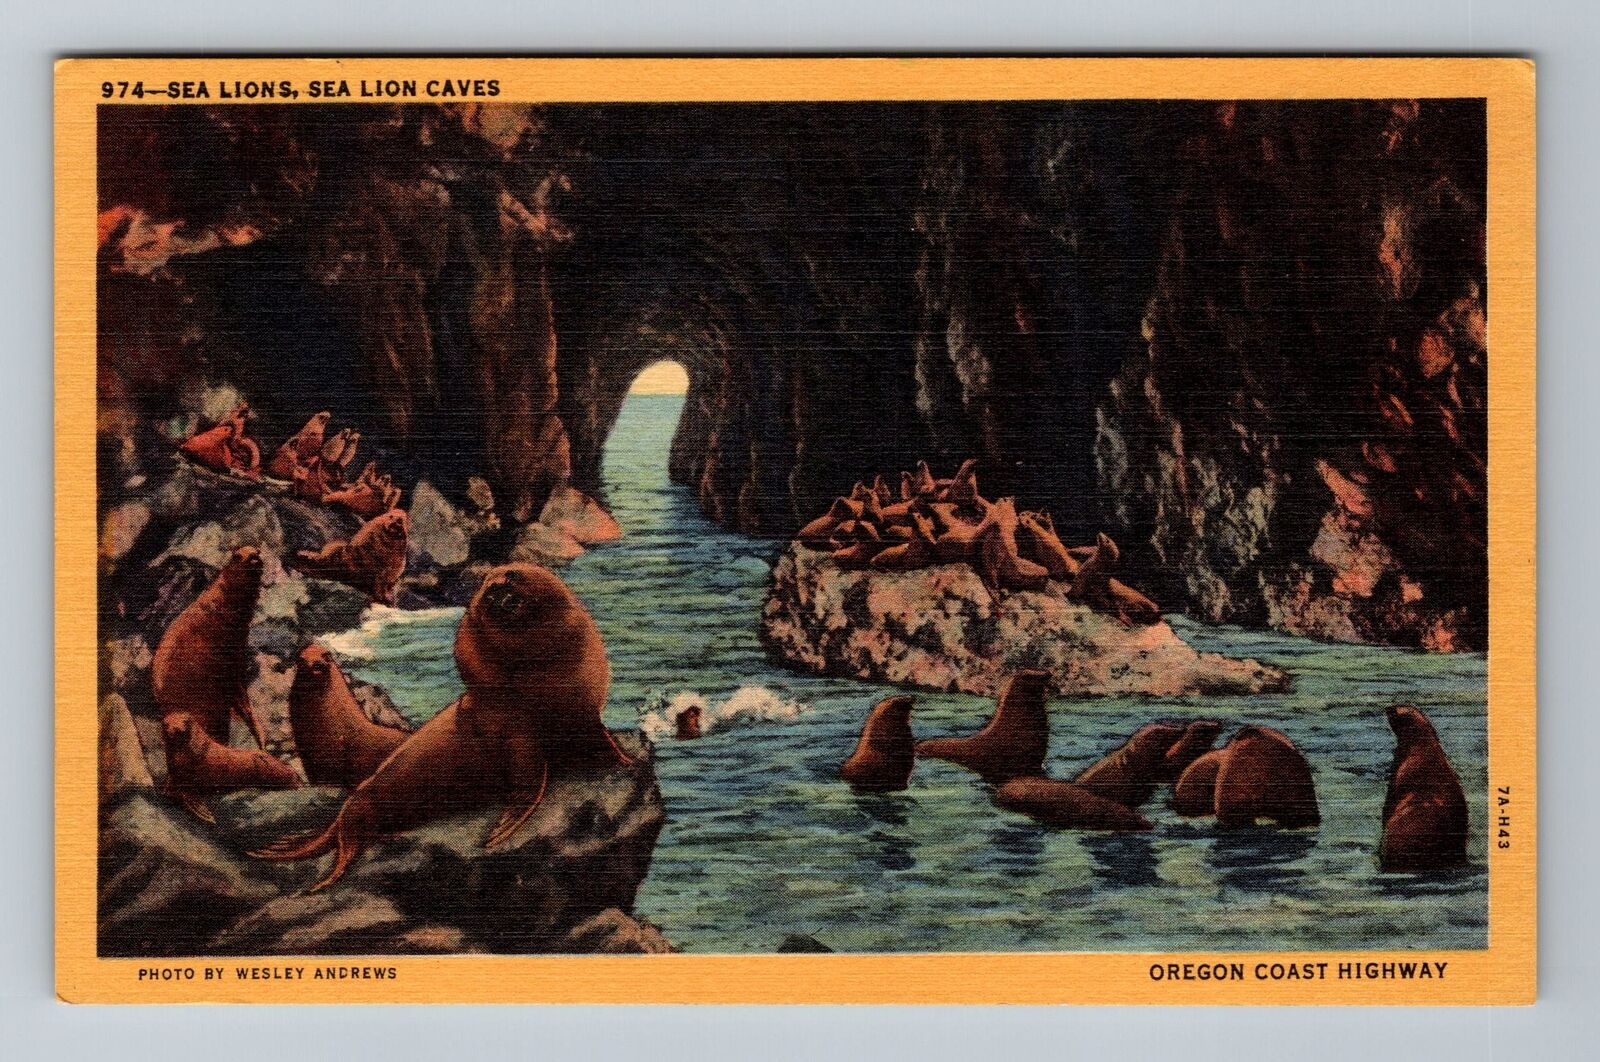 Seaside, OR-Oregon, Seal Lions In Sea Lions Caves Vintage Souvenir Postcard